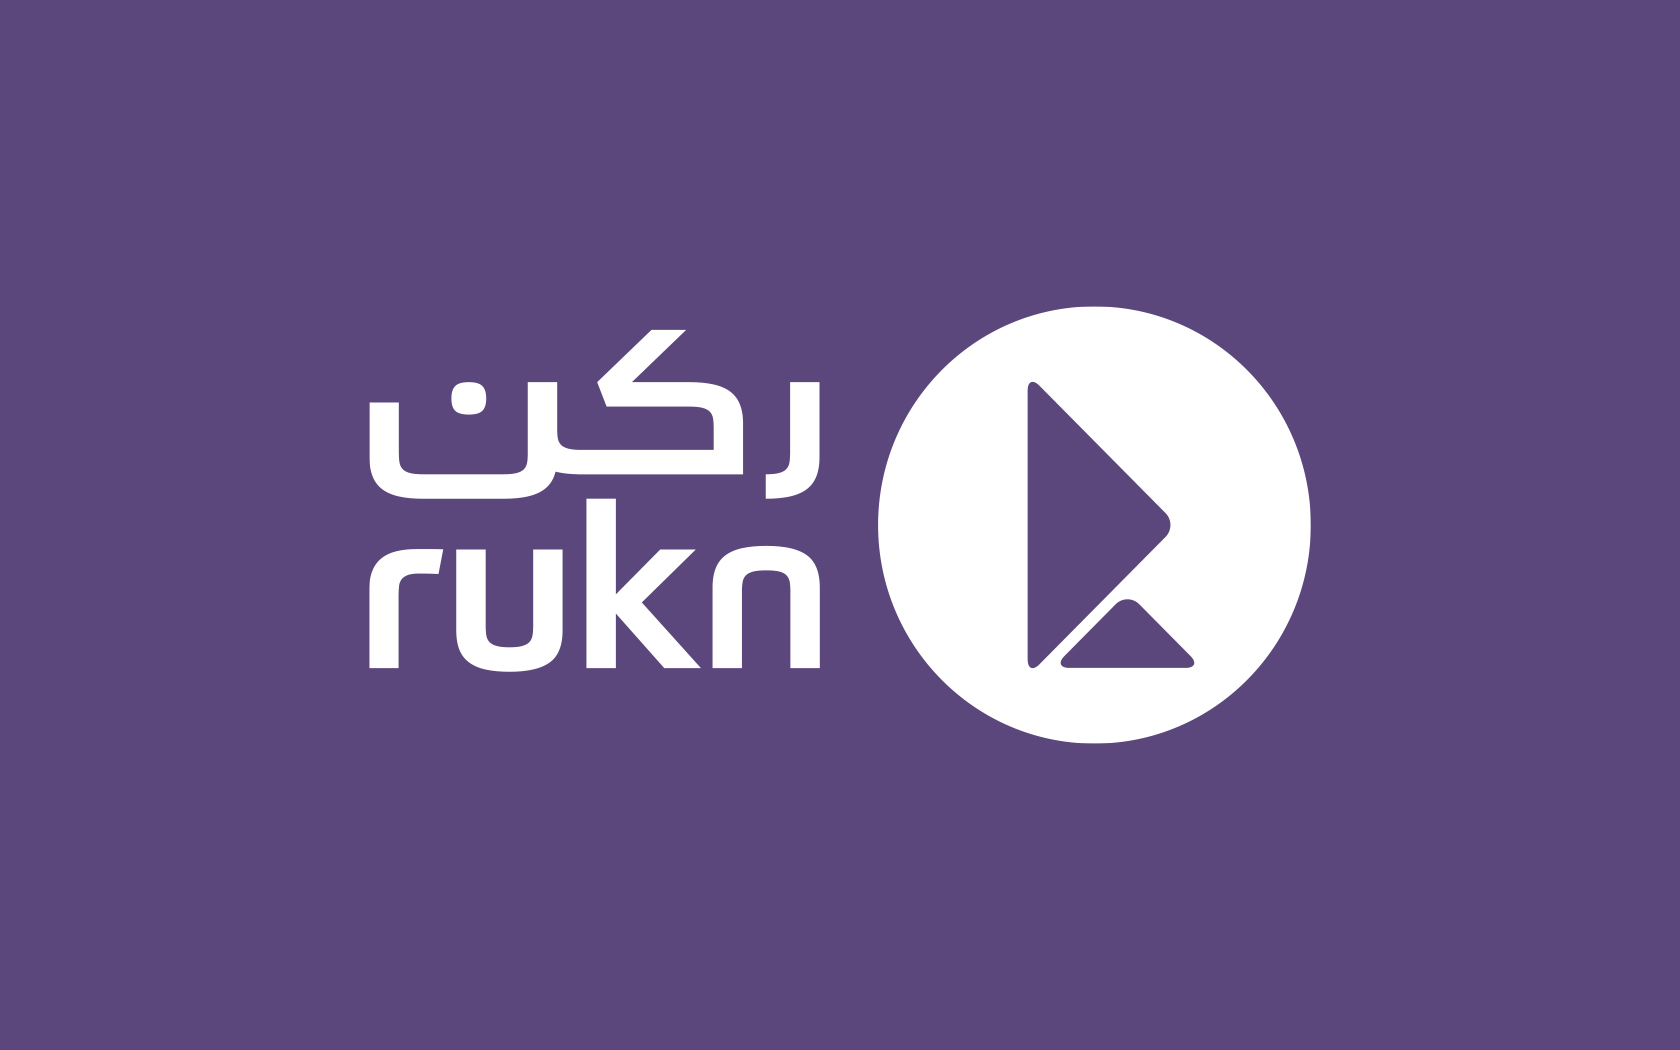 Rukn. Brand logo in white